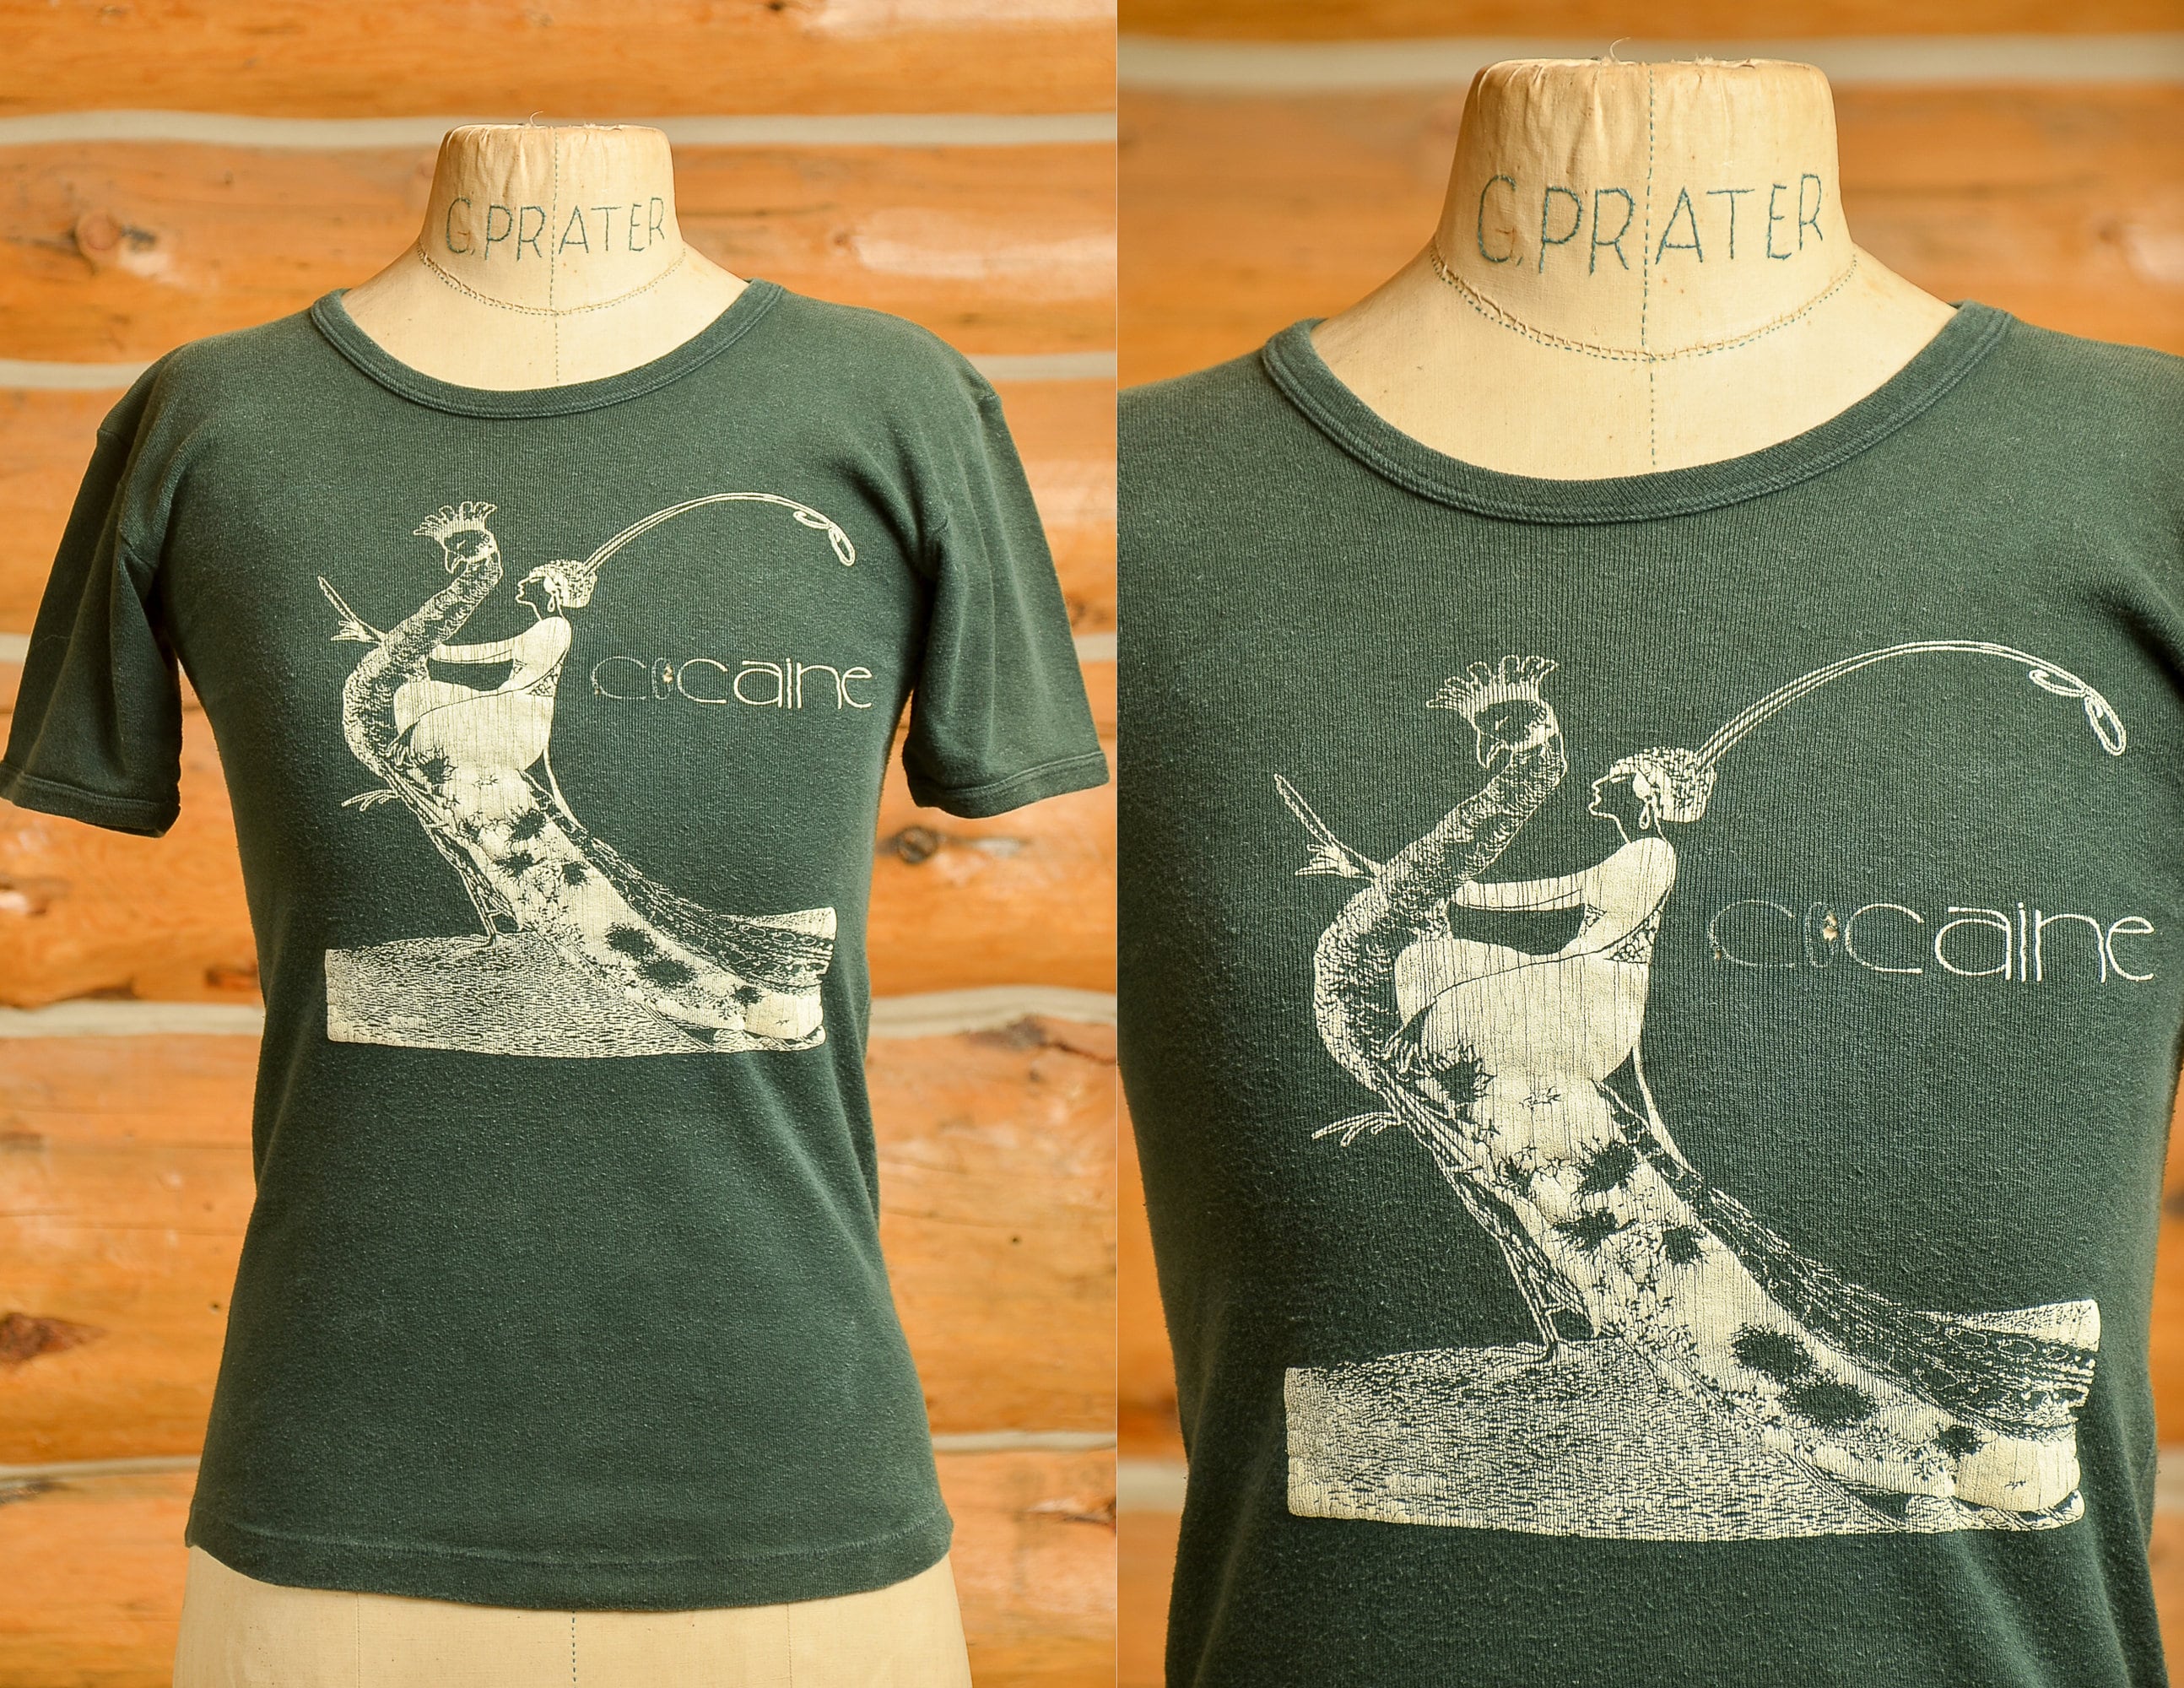 1970 Milwaukee Brewers Artwork: ICONIC® Men's 60/40 Blend T-Shirt